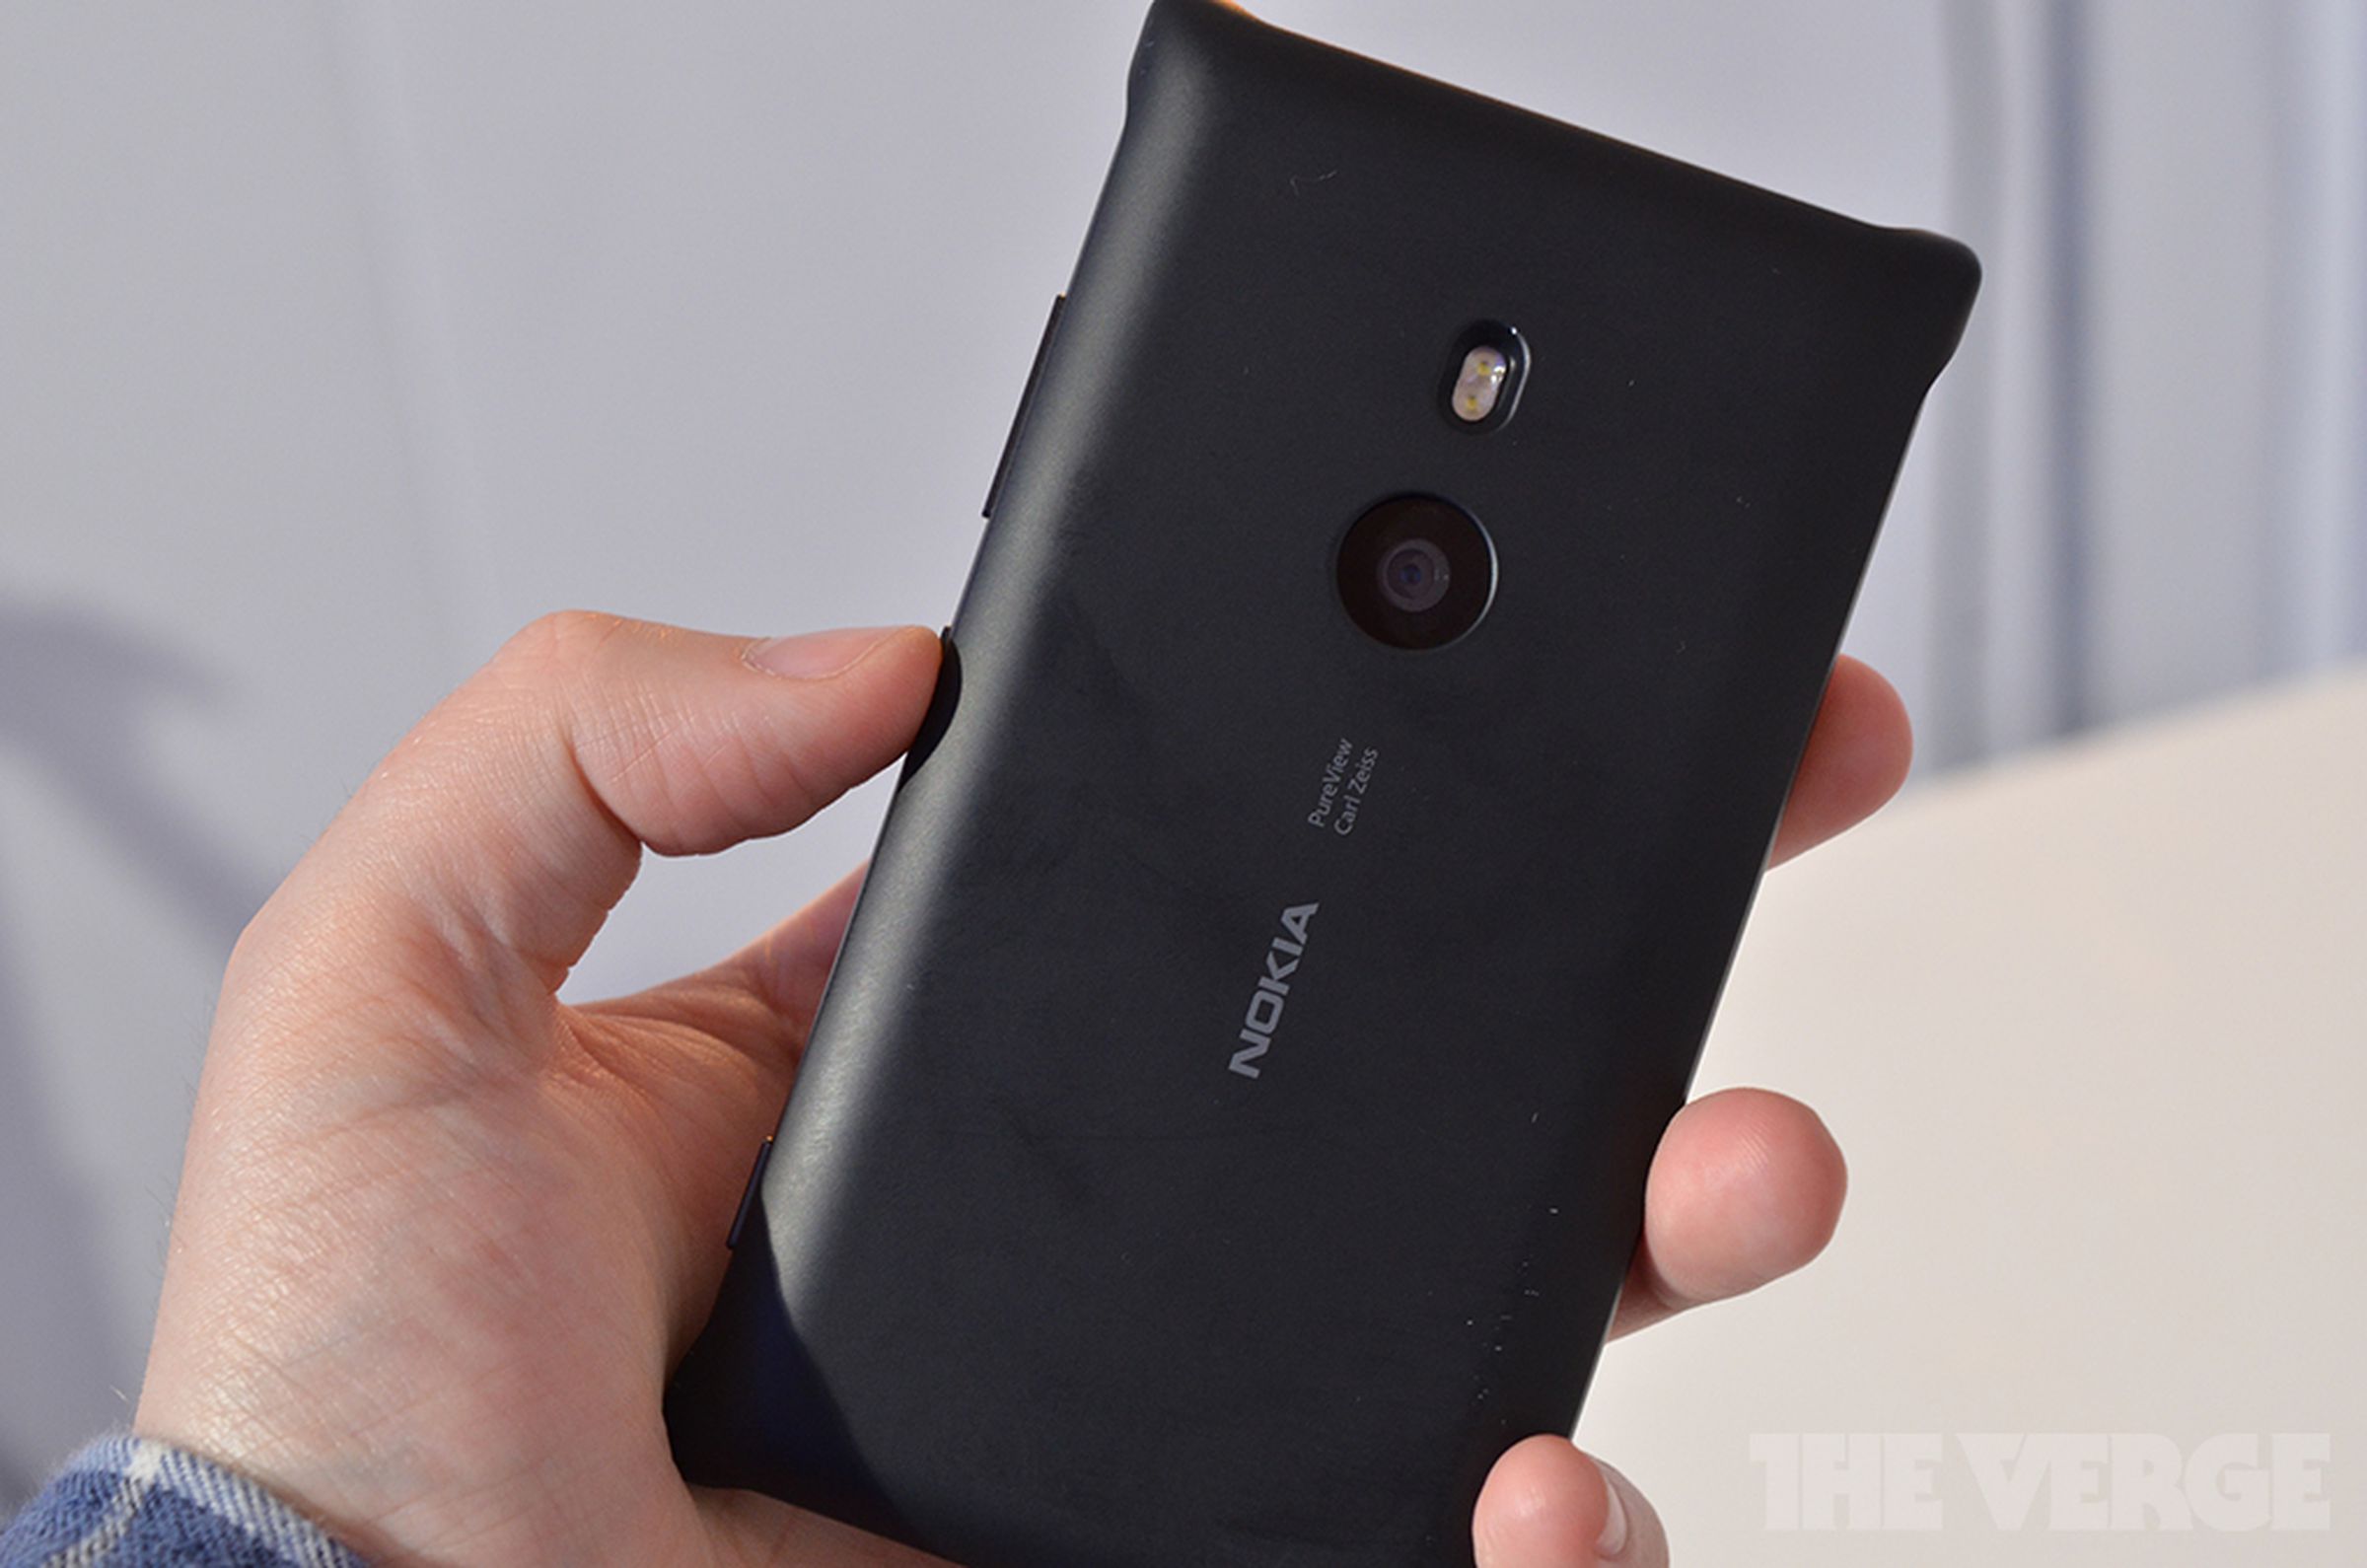 Nokia Lumia 925 hands-on gallery